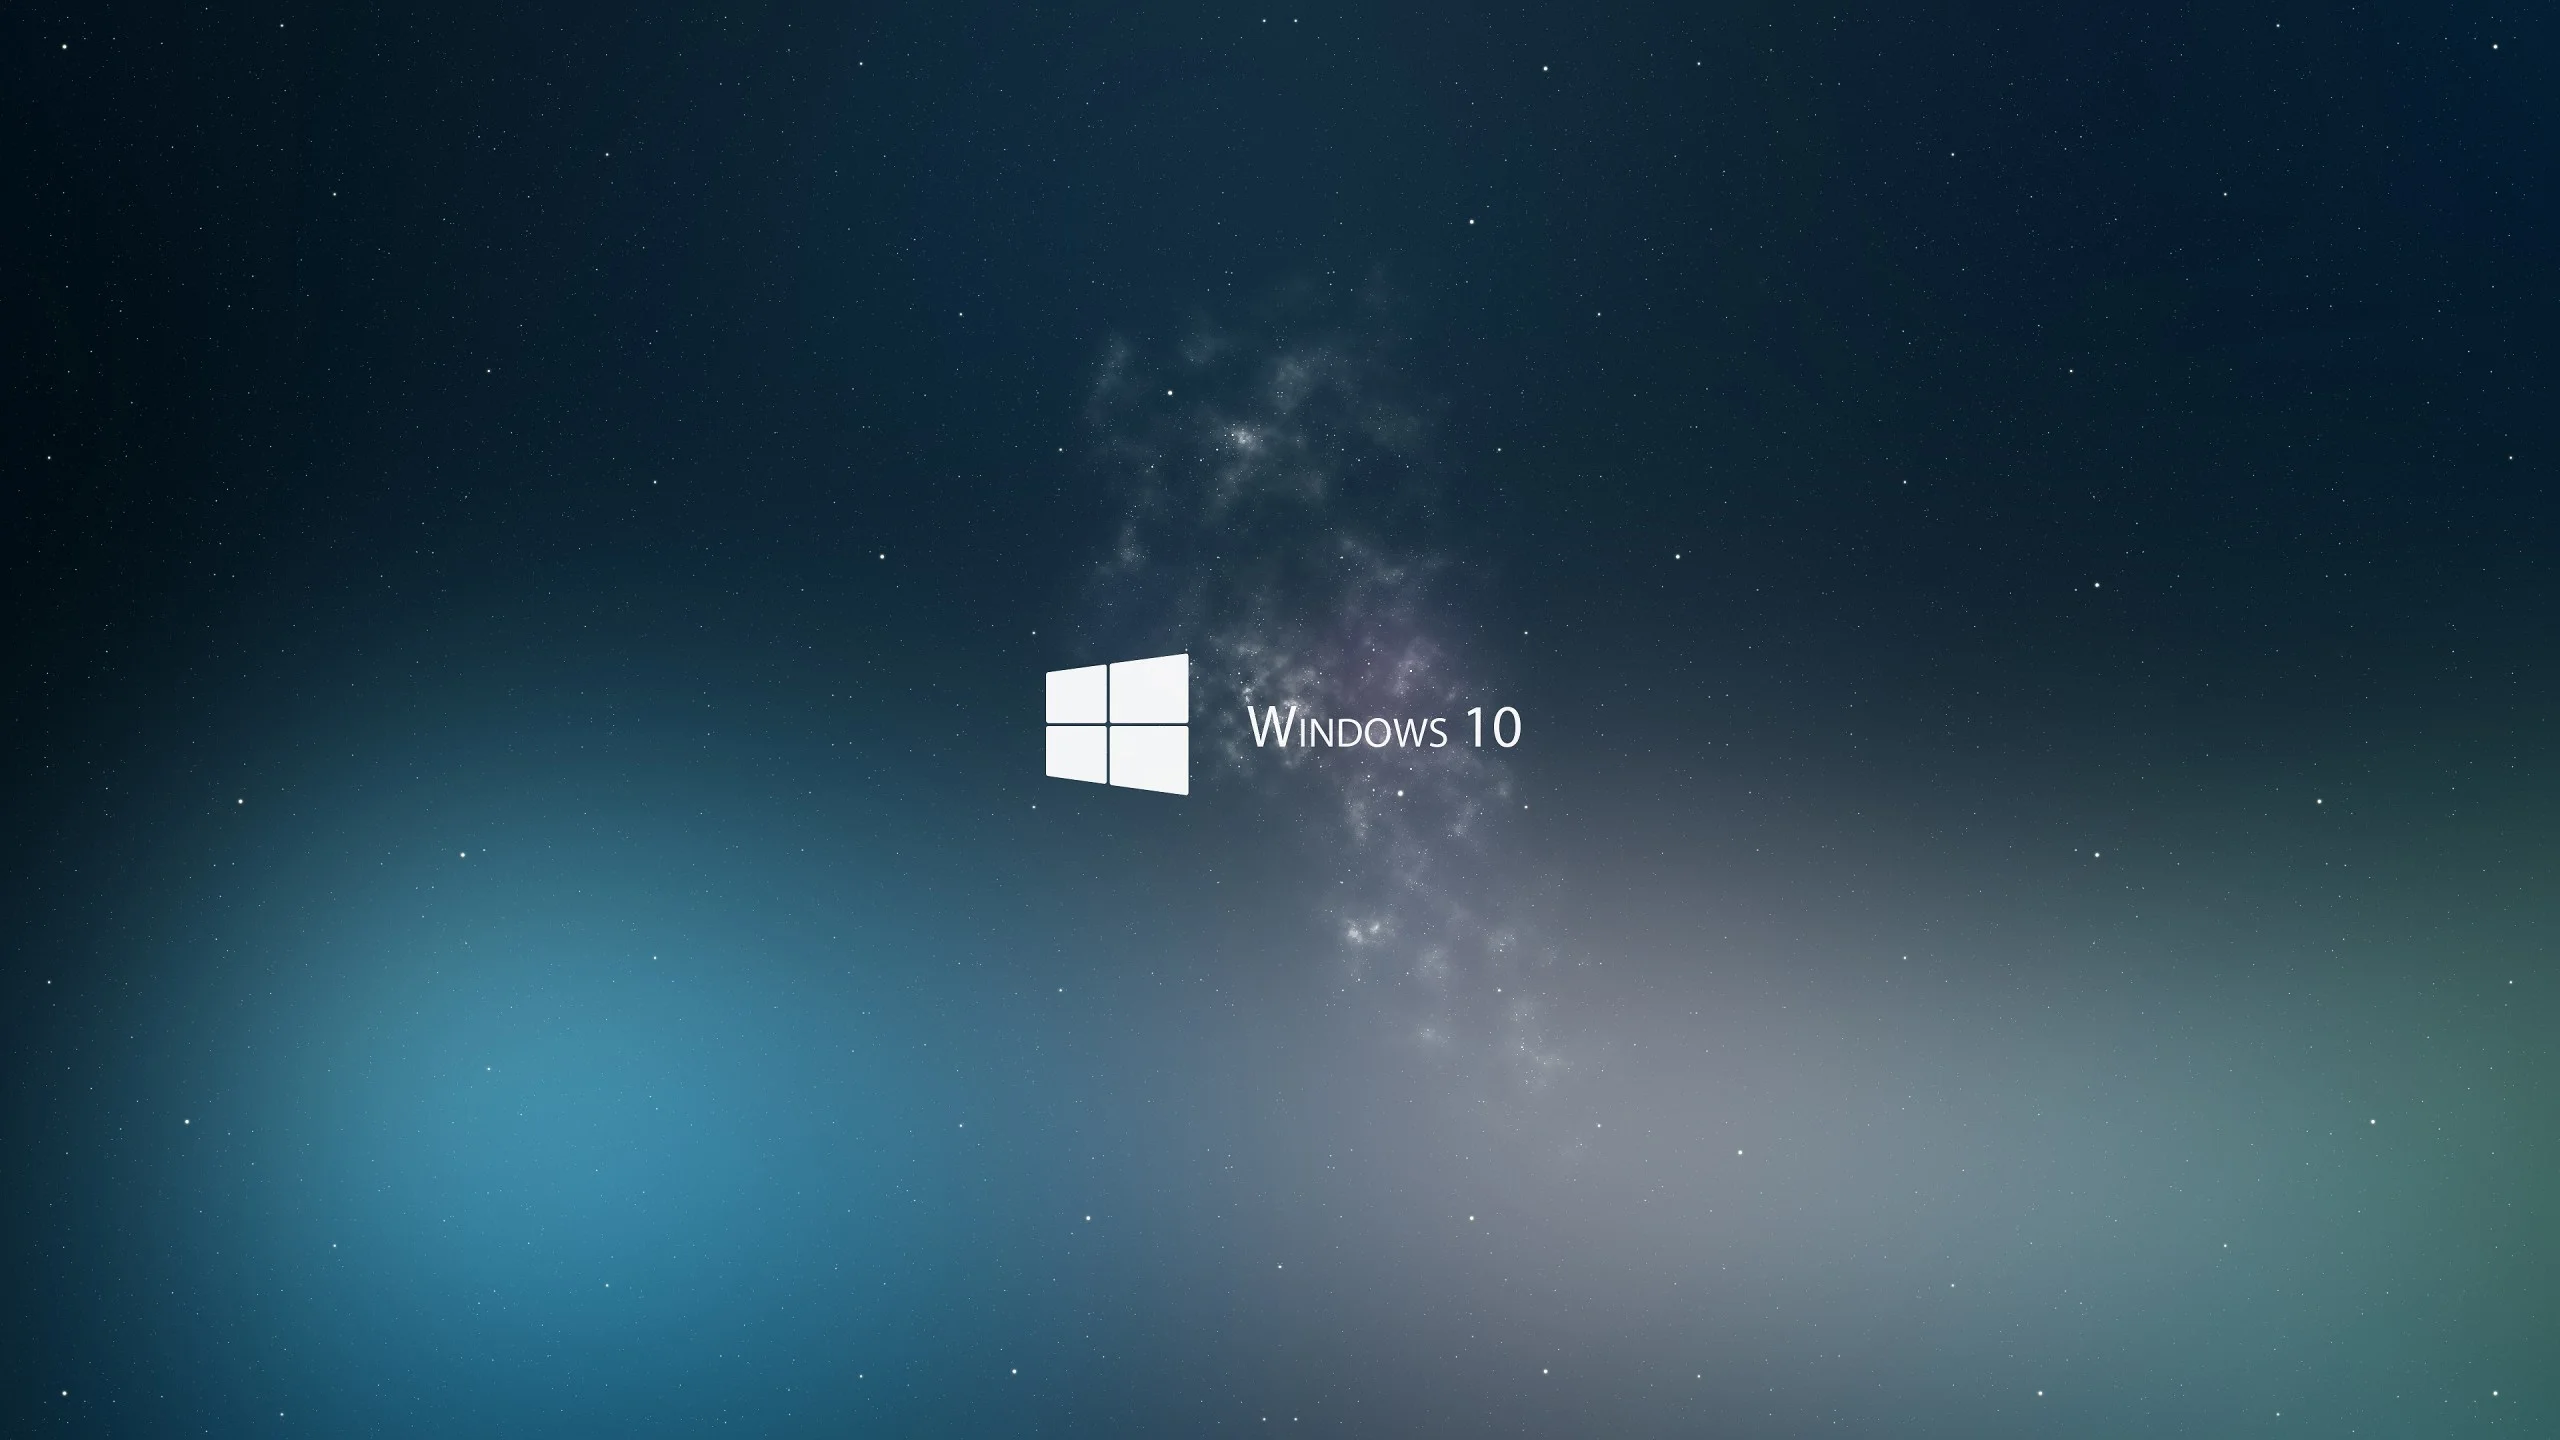 Download Windows 10 HD wallpaper for 2560 x 1440 – HDwallpapers.net